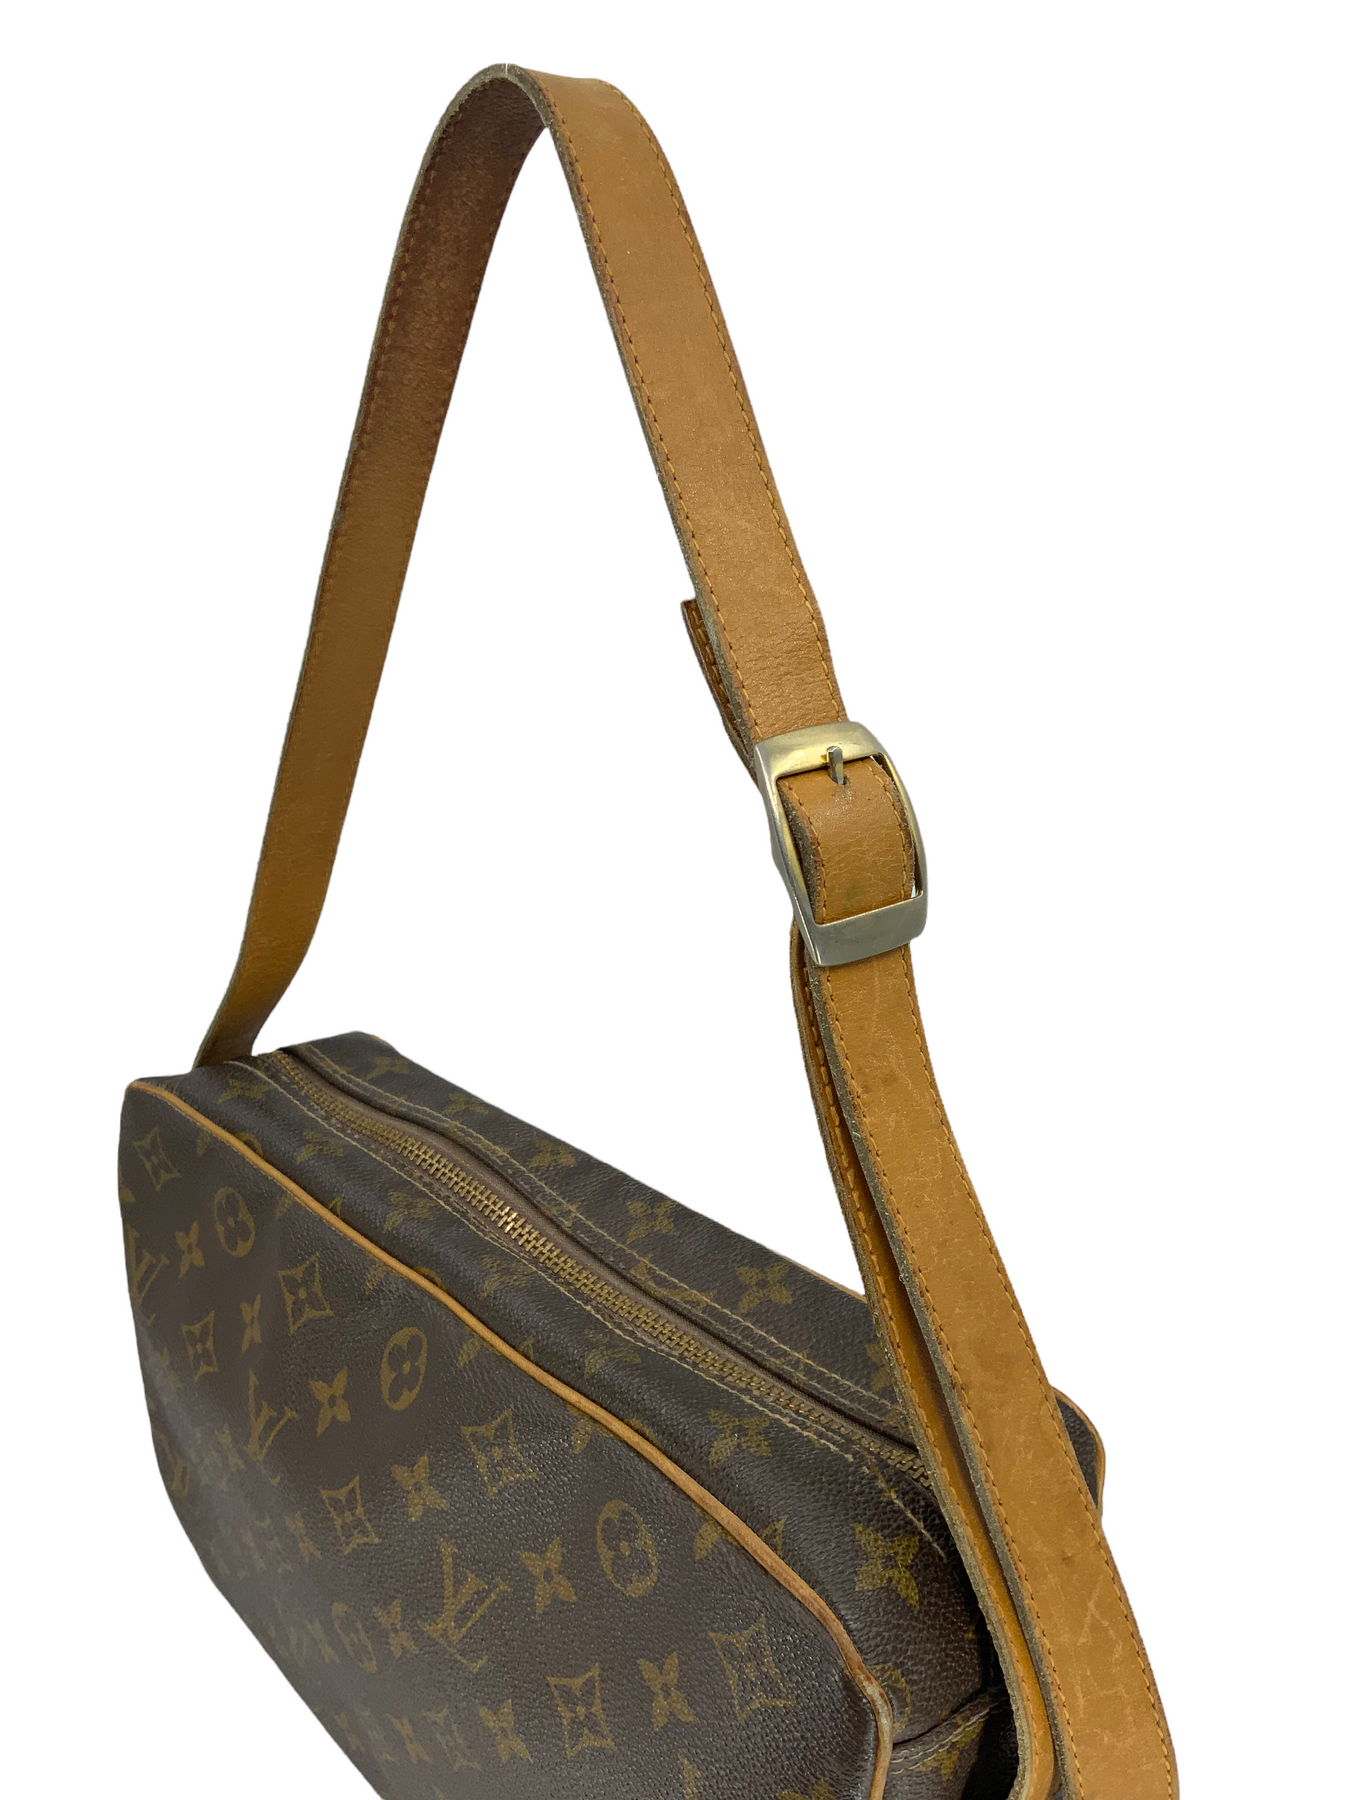 Louis+Vuitton+Sac+Bandouliere+Shoulder+Bag+Brown+Leather for sale online